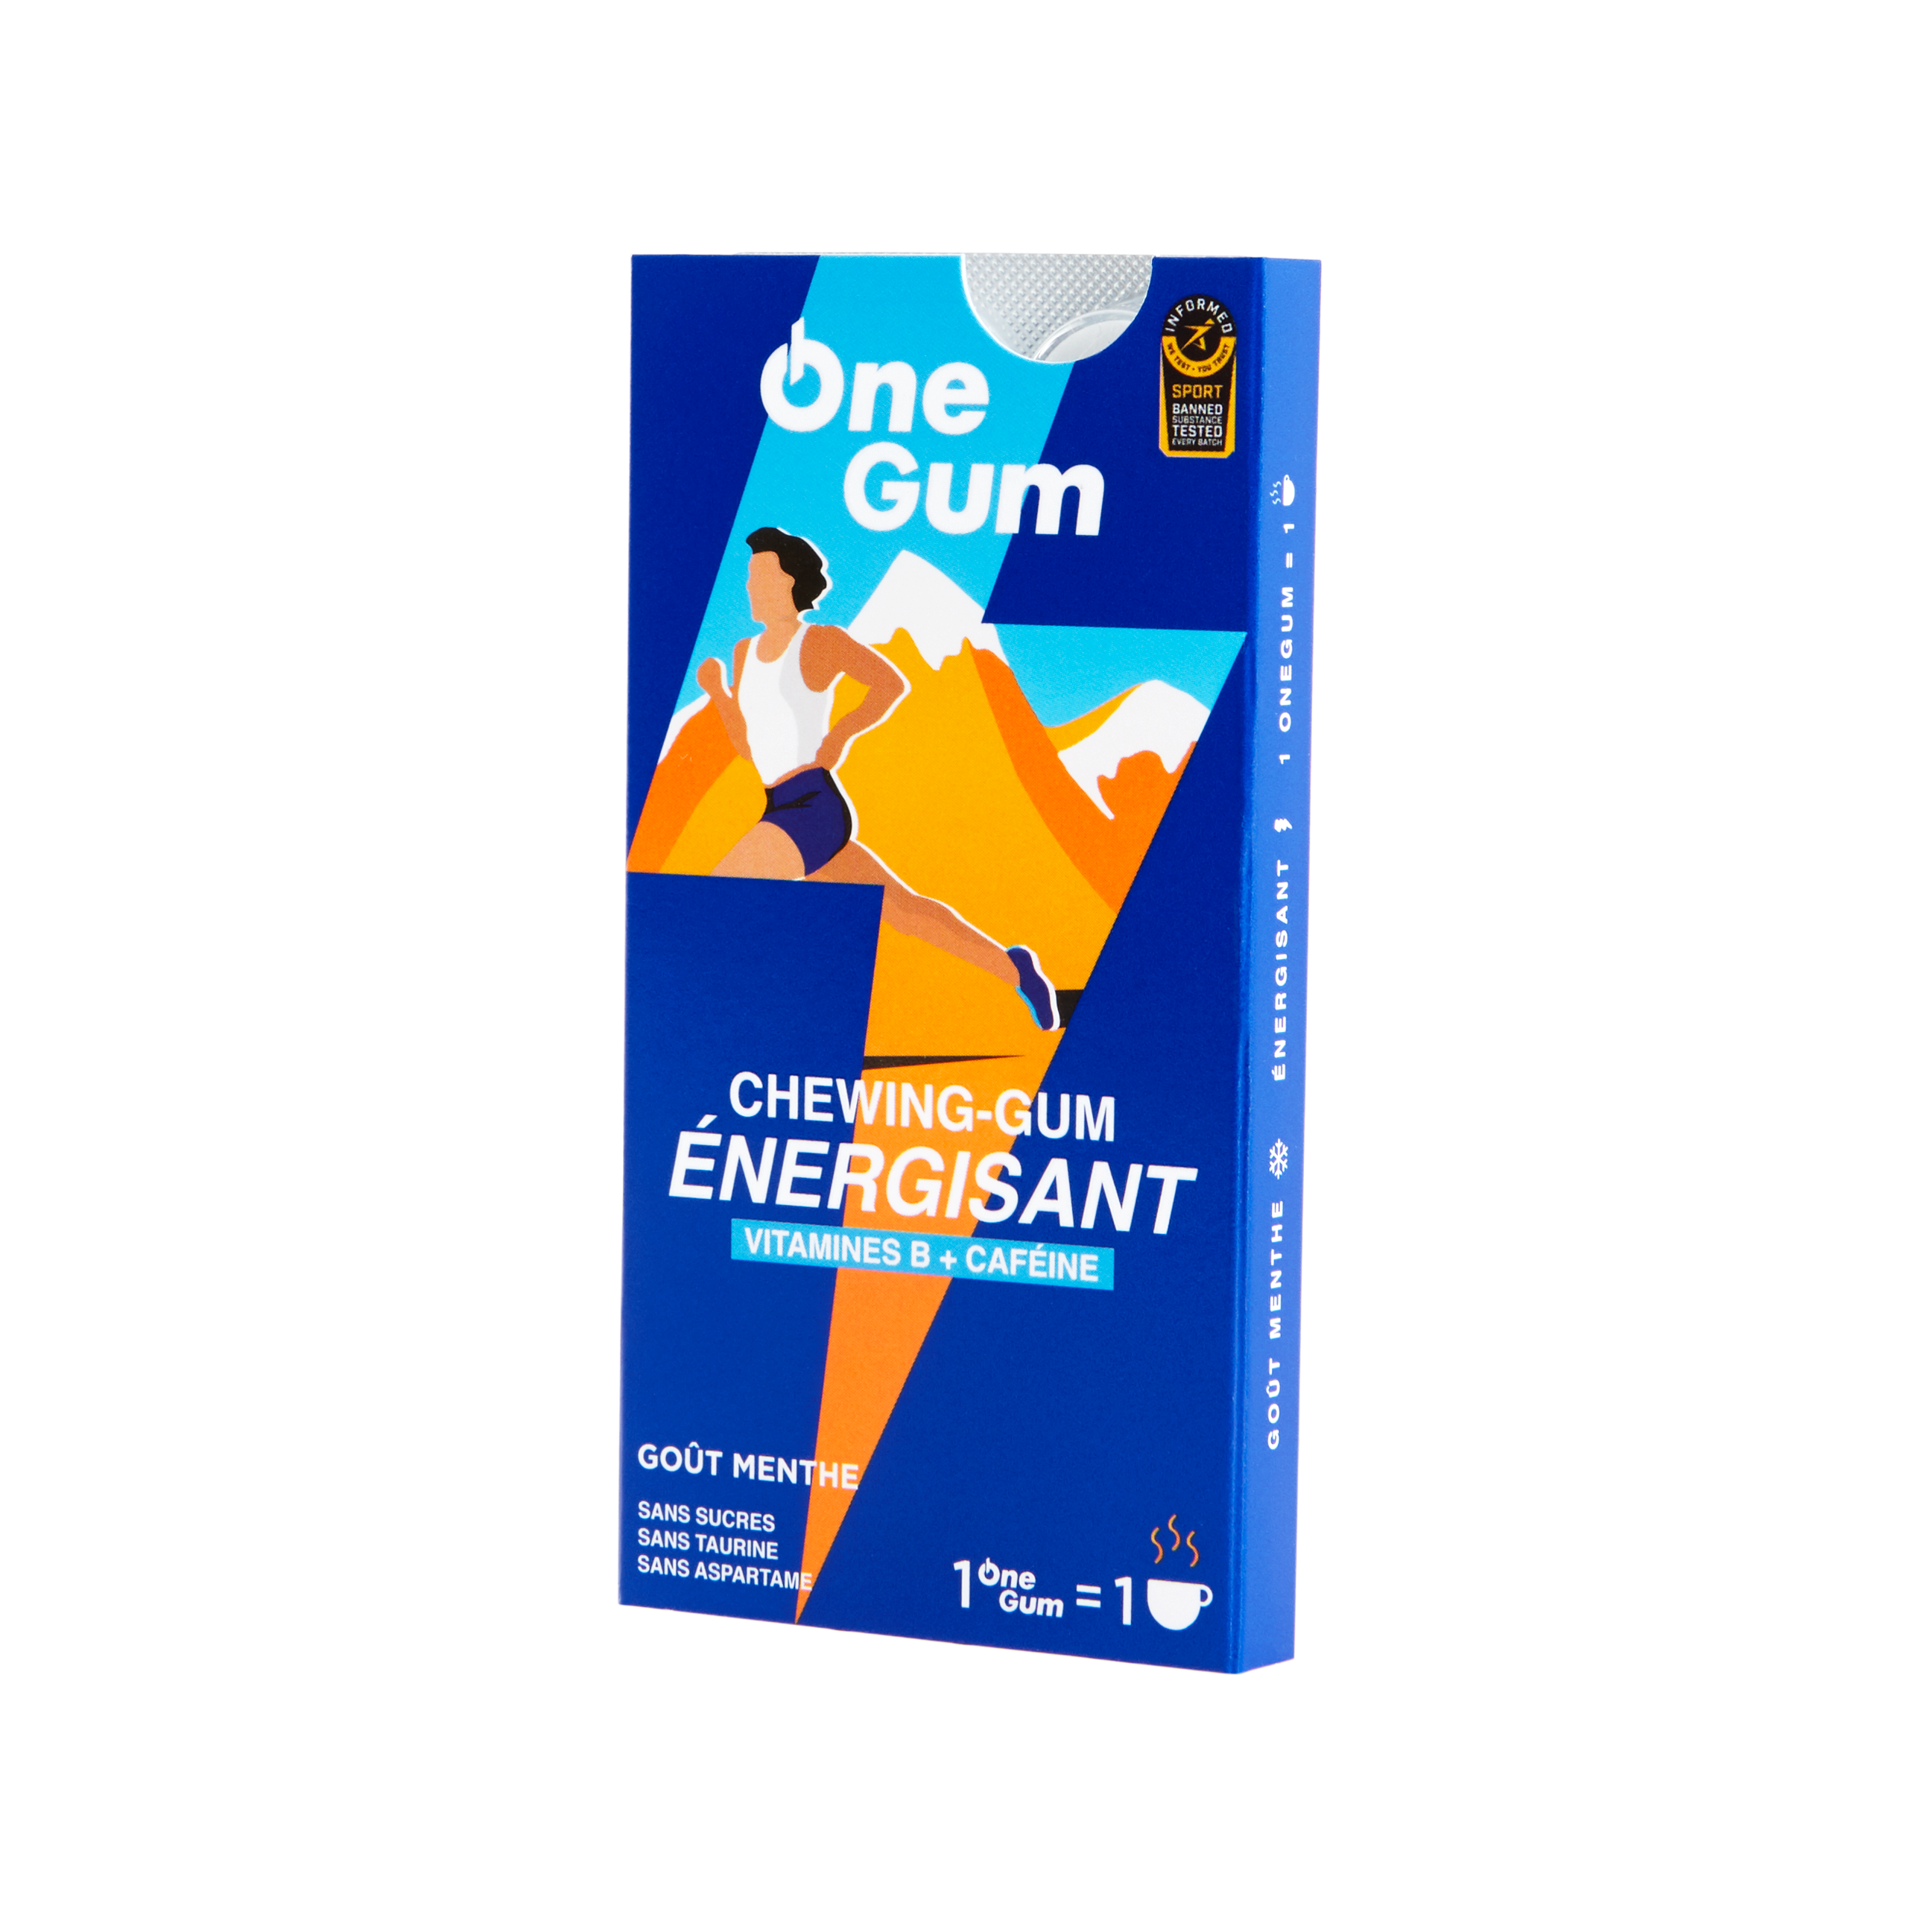 OneGum: international footballers' favourite energy gum!